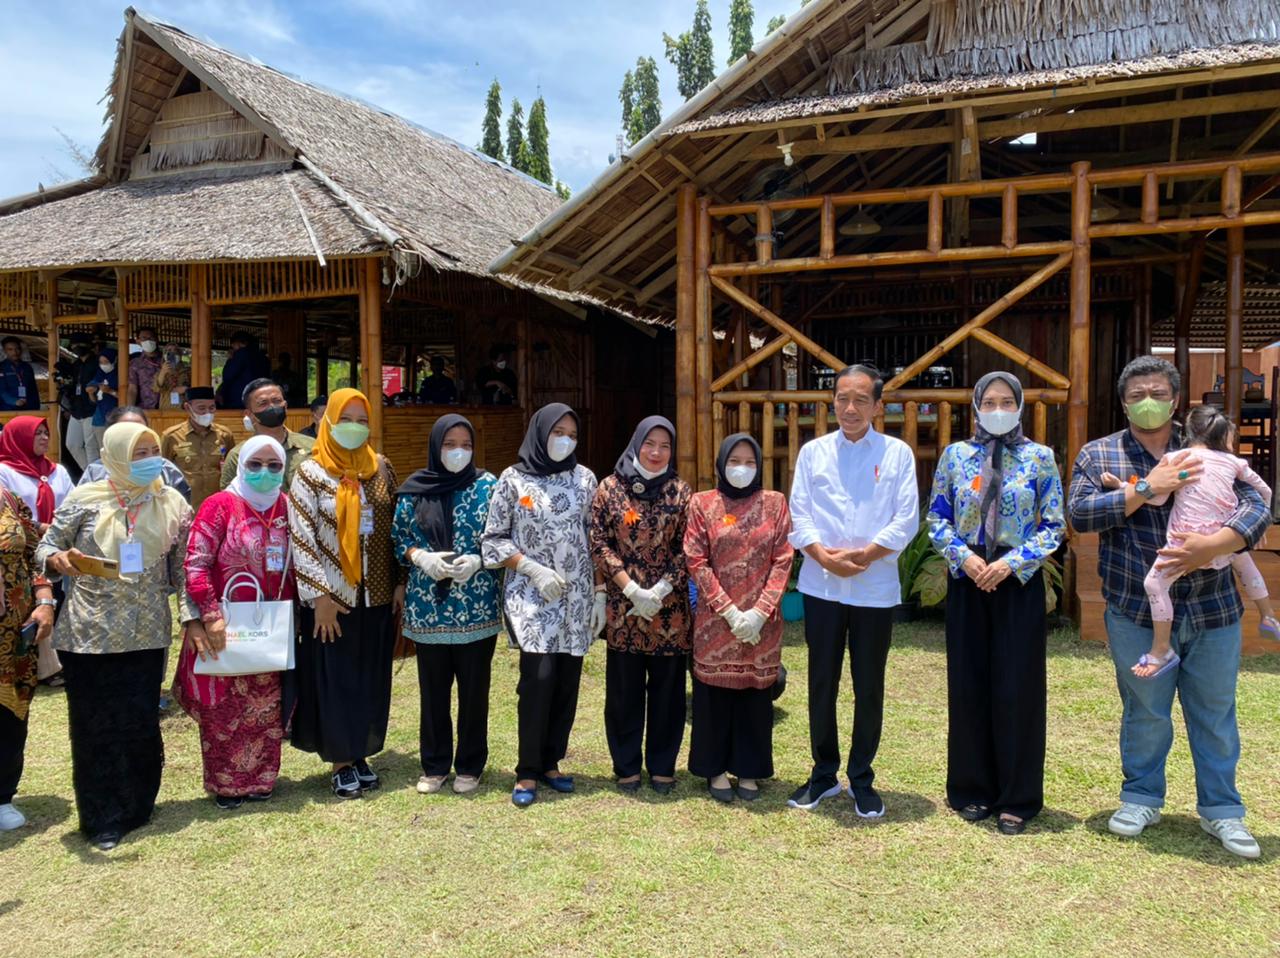 Warung ikan bakar milik Uswatun Chasanah di Teluk Jailolo, Halmahera Barat mendapat kunjungan khusus dari Presiden Joko Widodo (Jokowi), Rabu (28/9/2022).